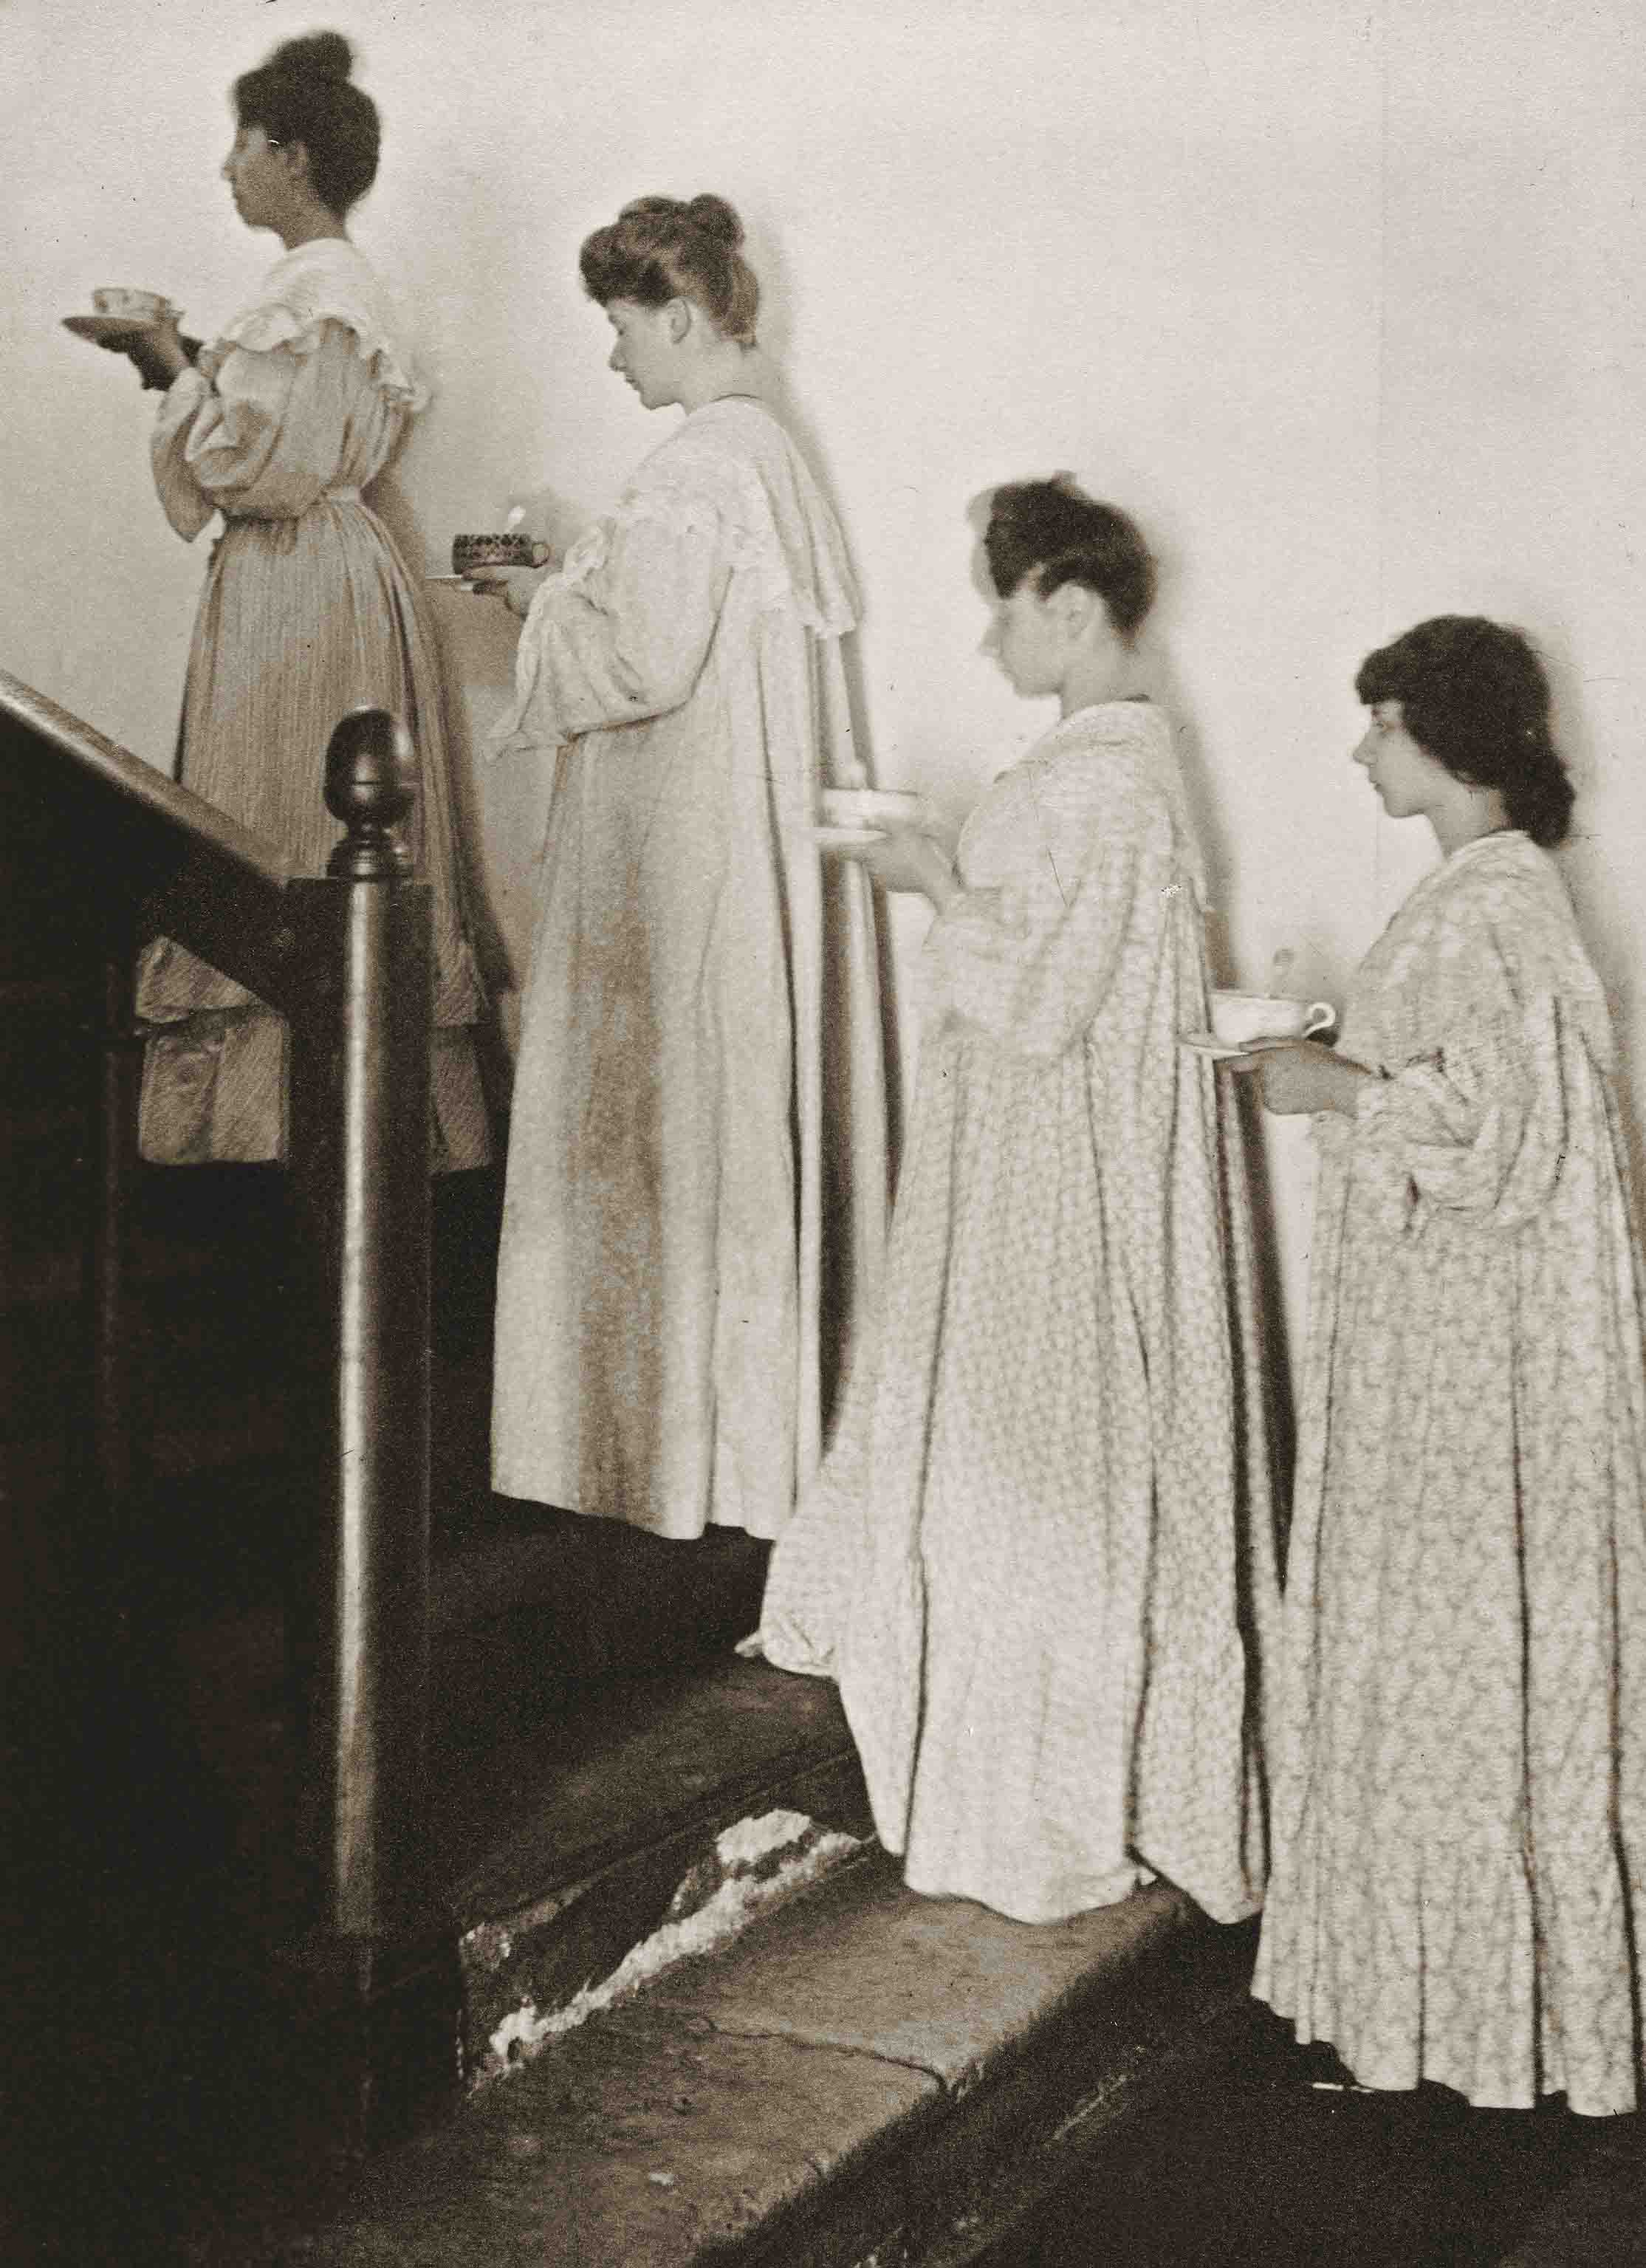 Procession dans l'escalier de Varennes - Varennes, Fougerolles, Indre, 1904 © G. Wolkowitsch